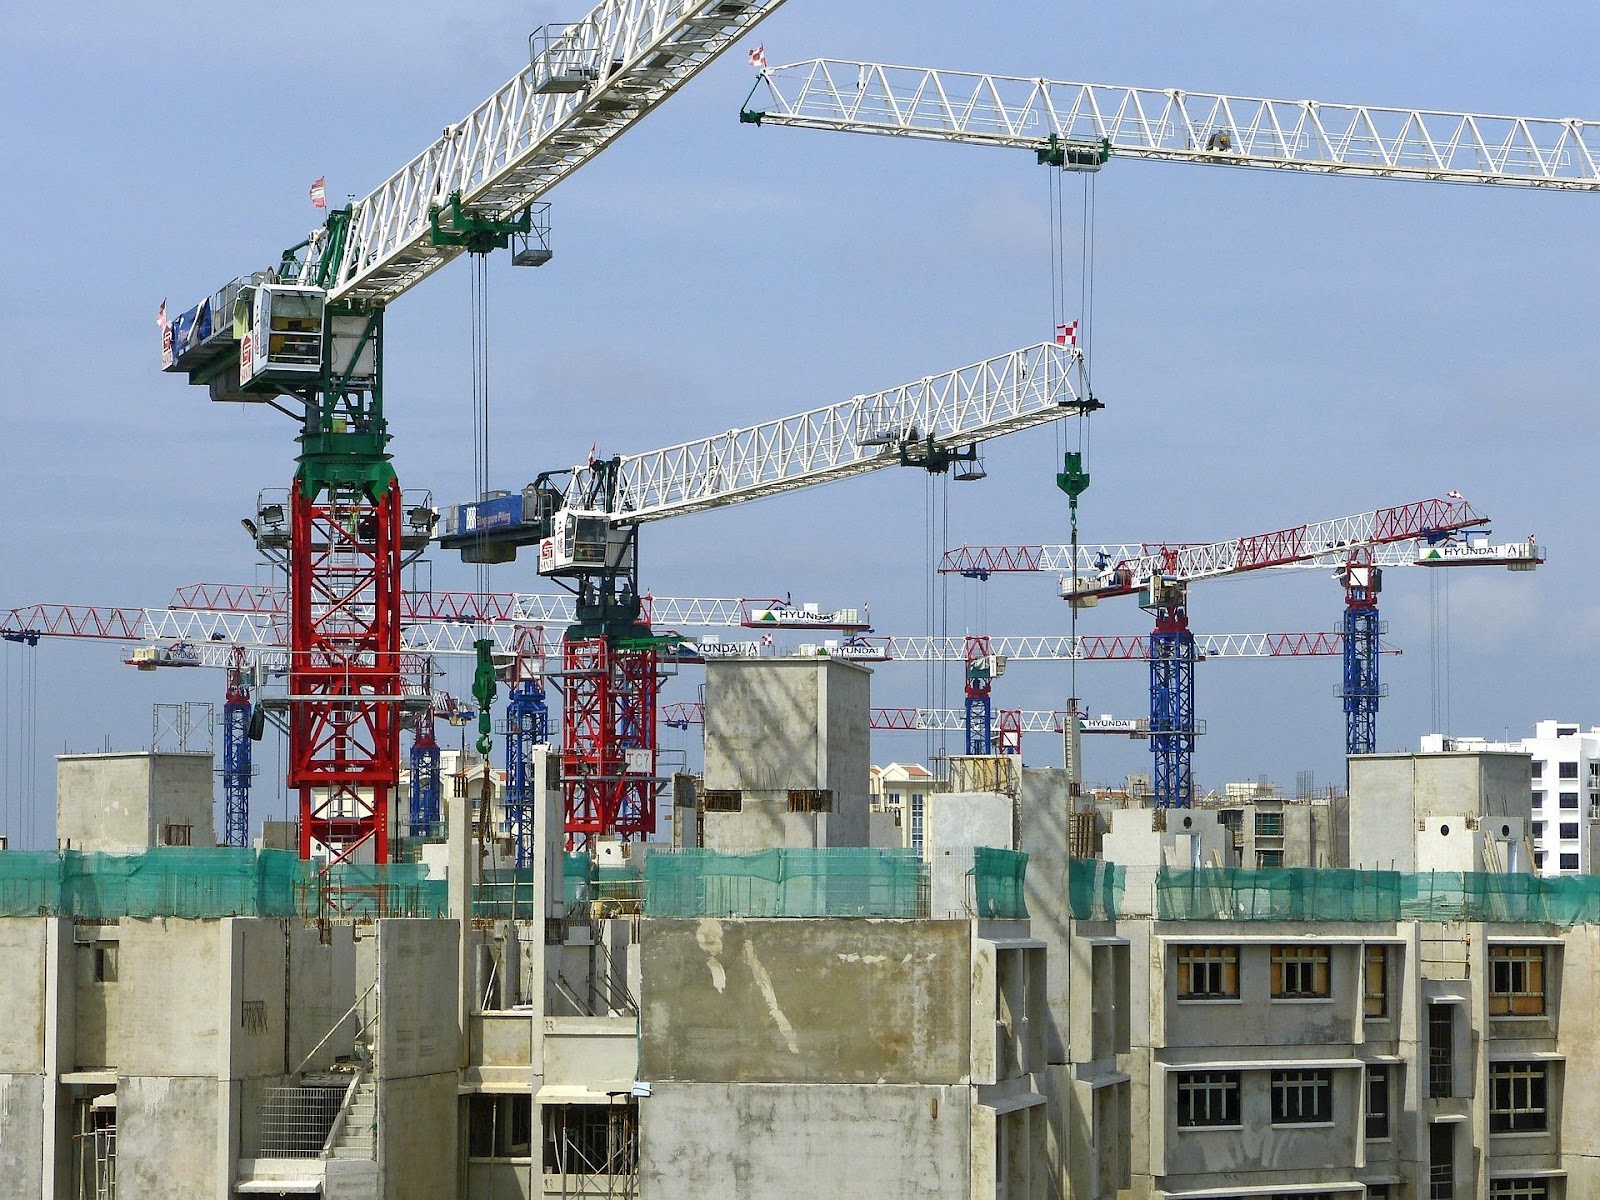 A construction site with multiple cranes over concrete buildings.